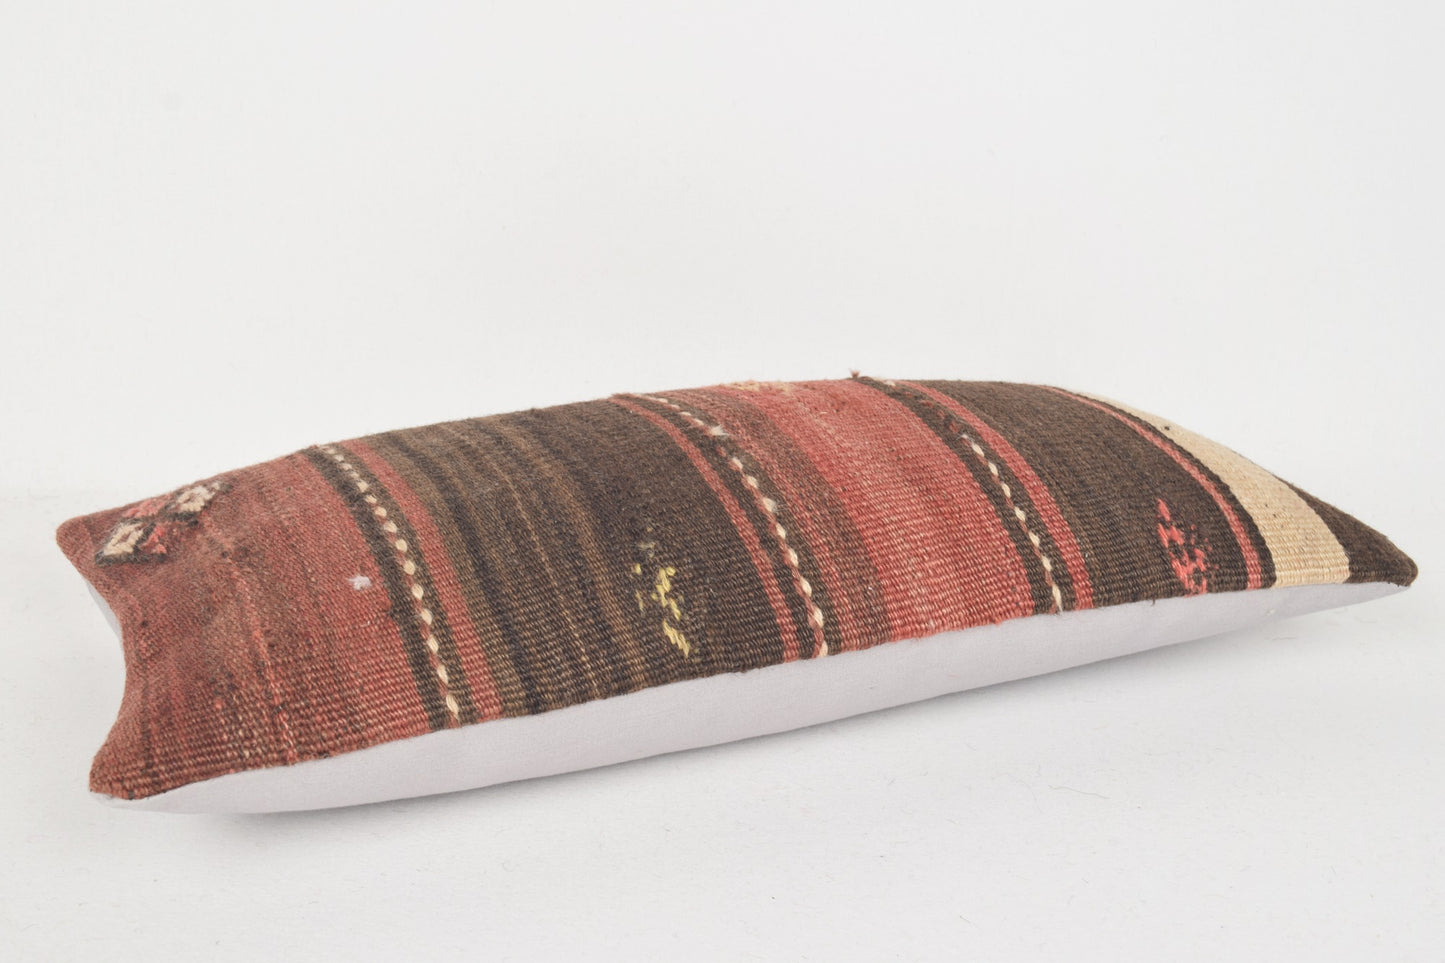 Vintage Kilim Hand Woven Rug Pillow G00321 Village Regular Neutral Textile Hellenistic